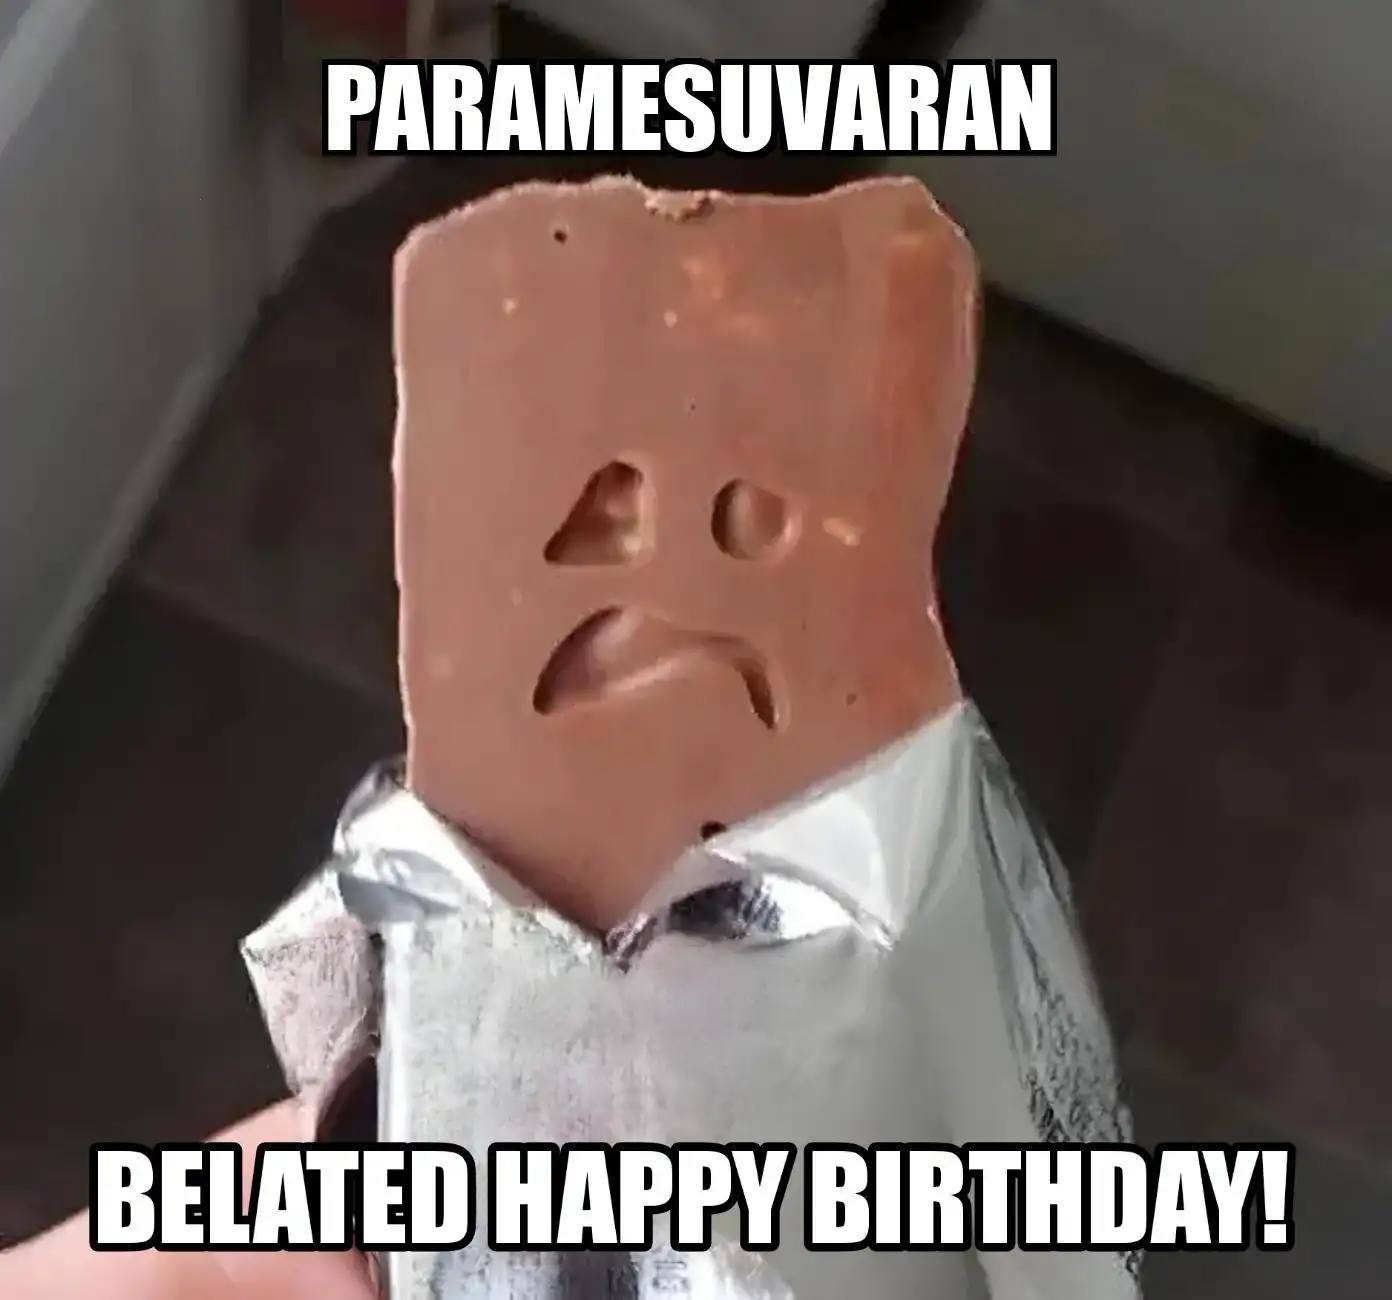 Happy Birthday Paramesuvaran Belated Happy Birthday Meme